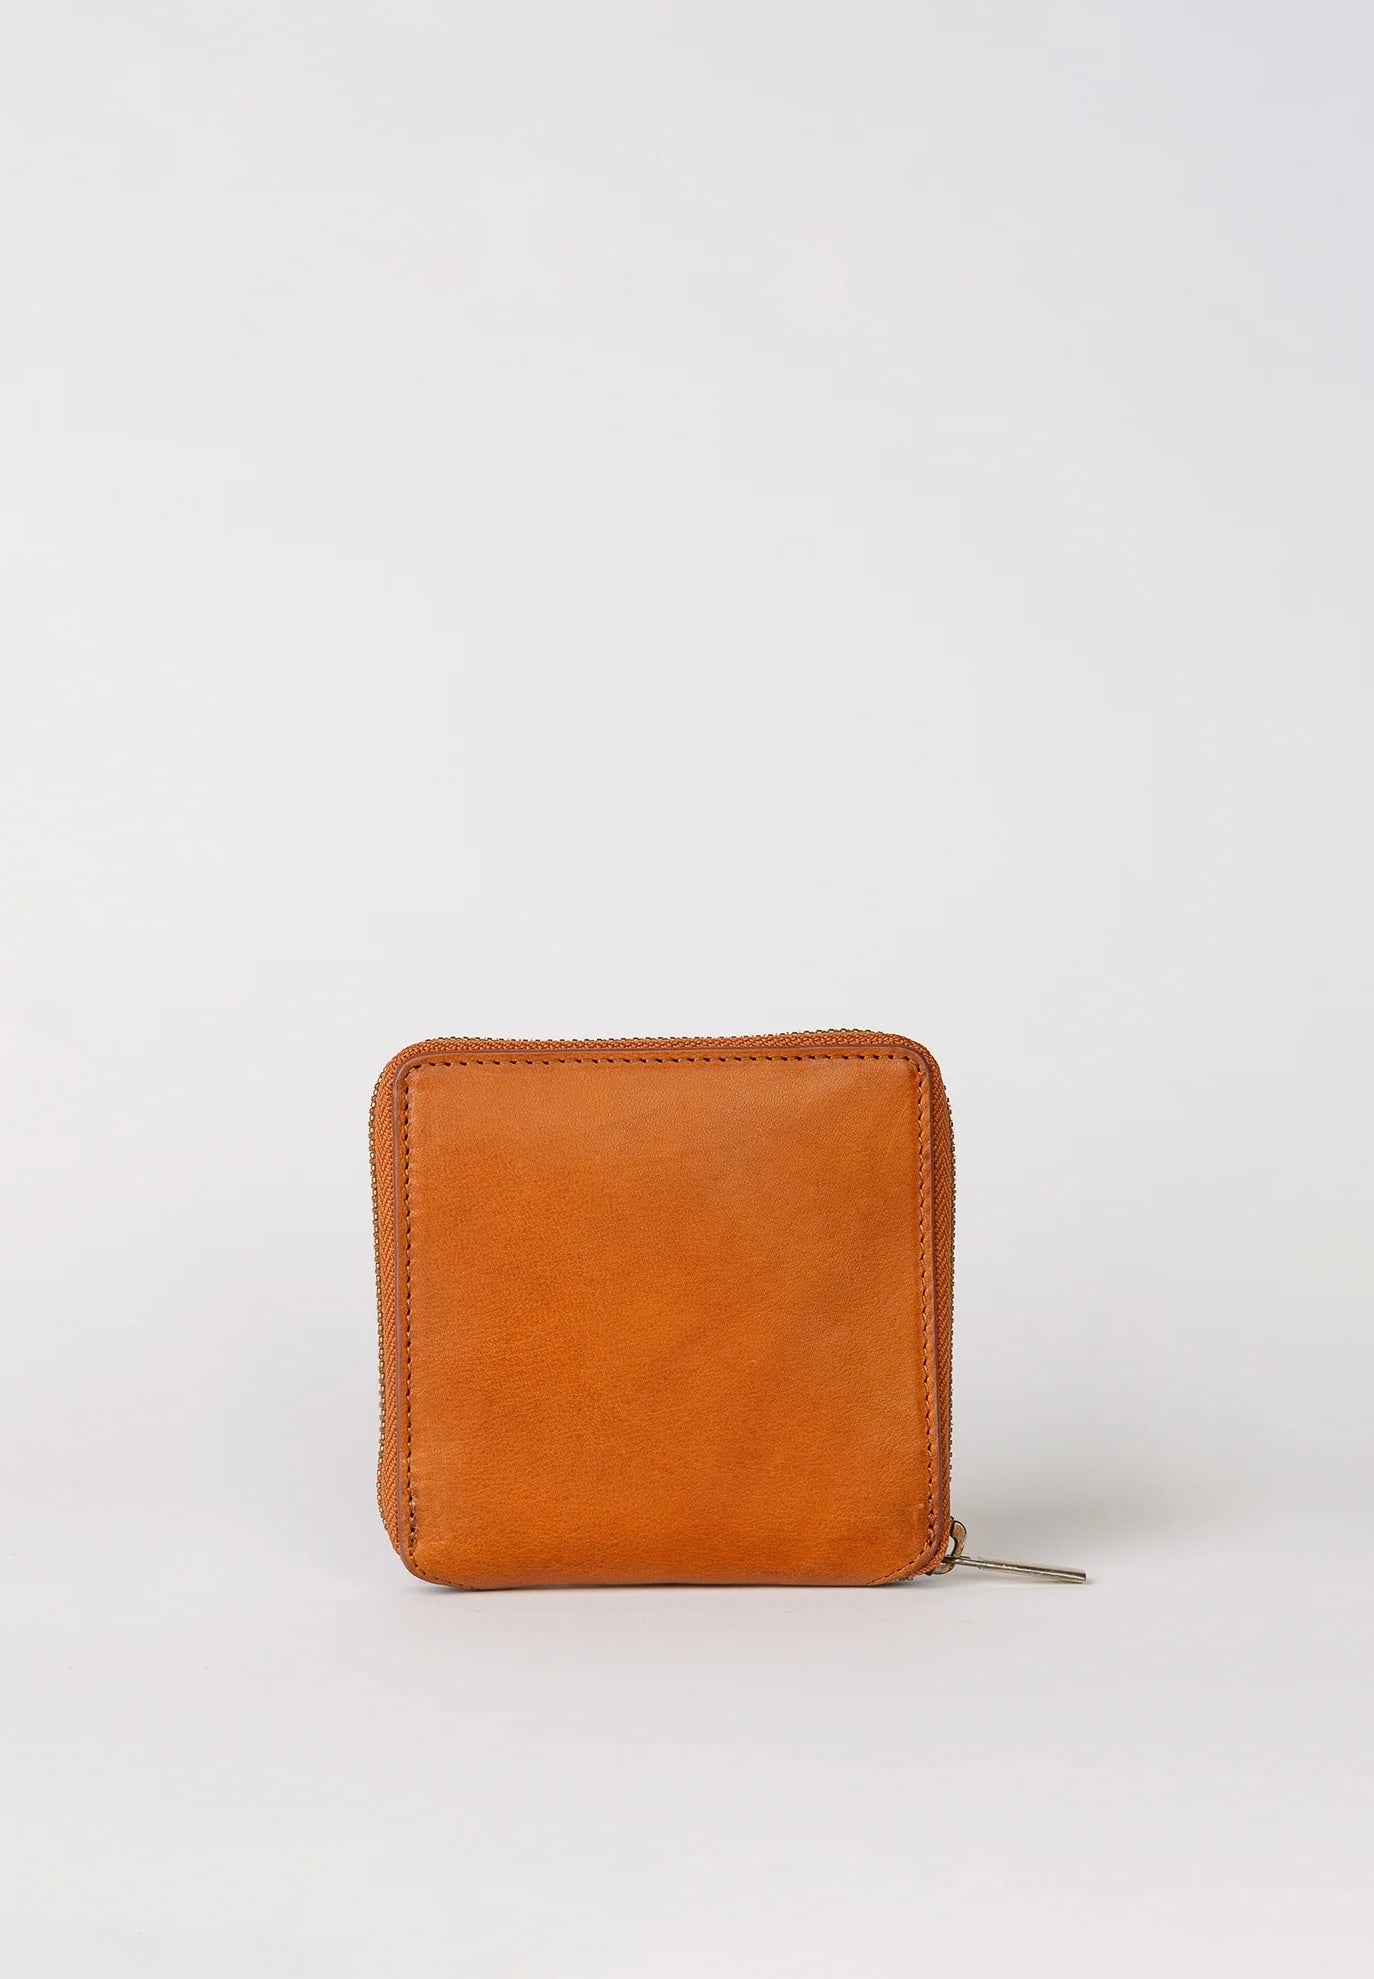 sonny square wallet cognac stromboli leather